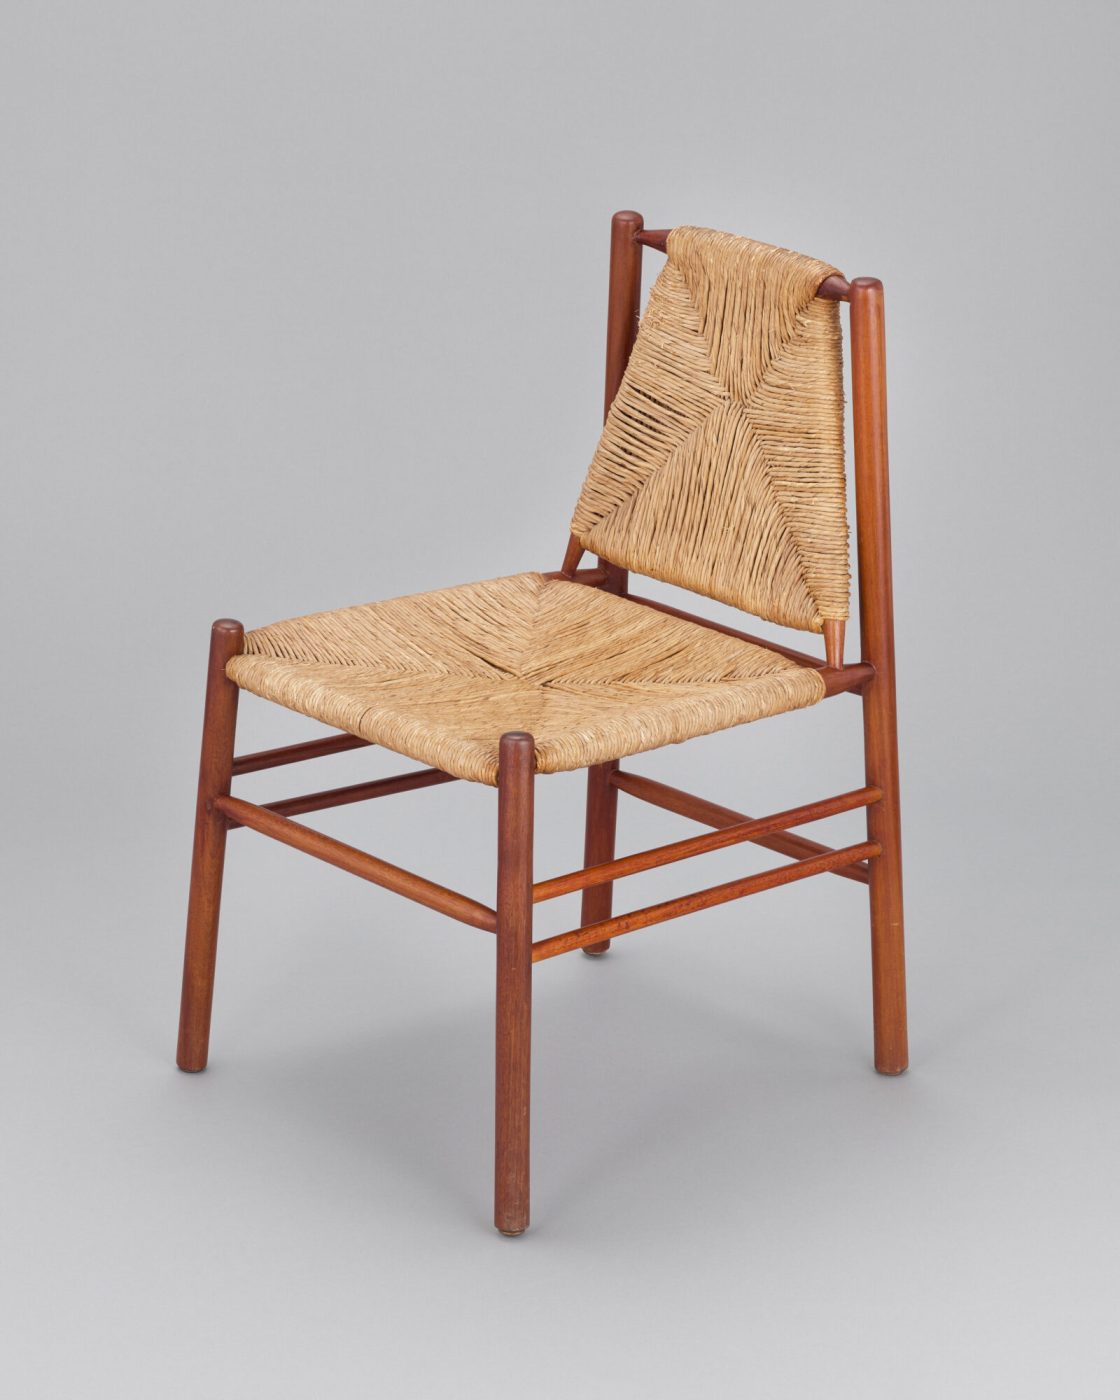 A 1955 dining chair created by Dutch-born Venezuelan CORNELIS ZITMAN